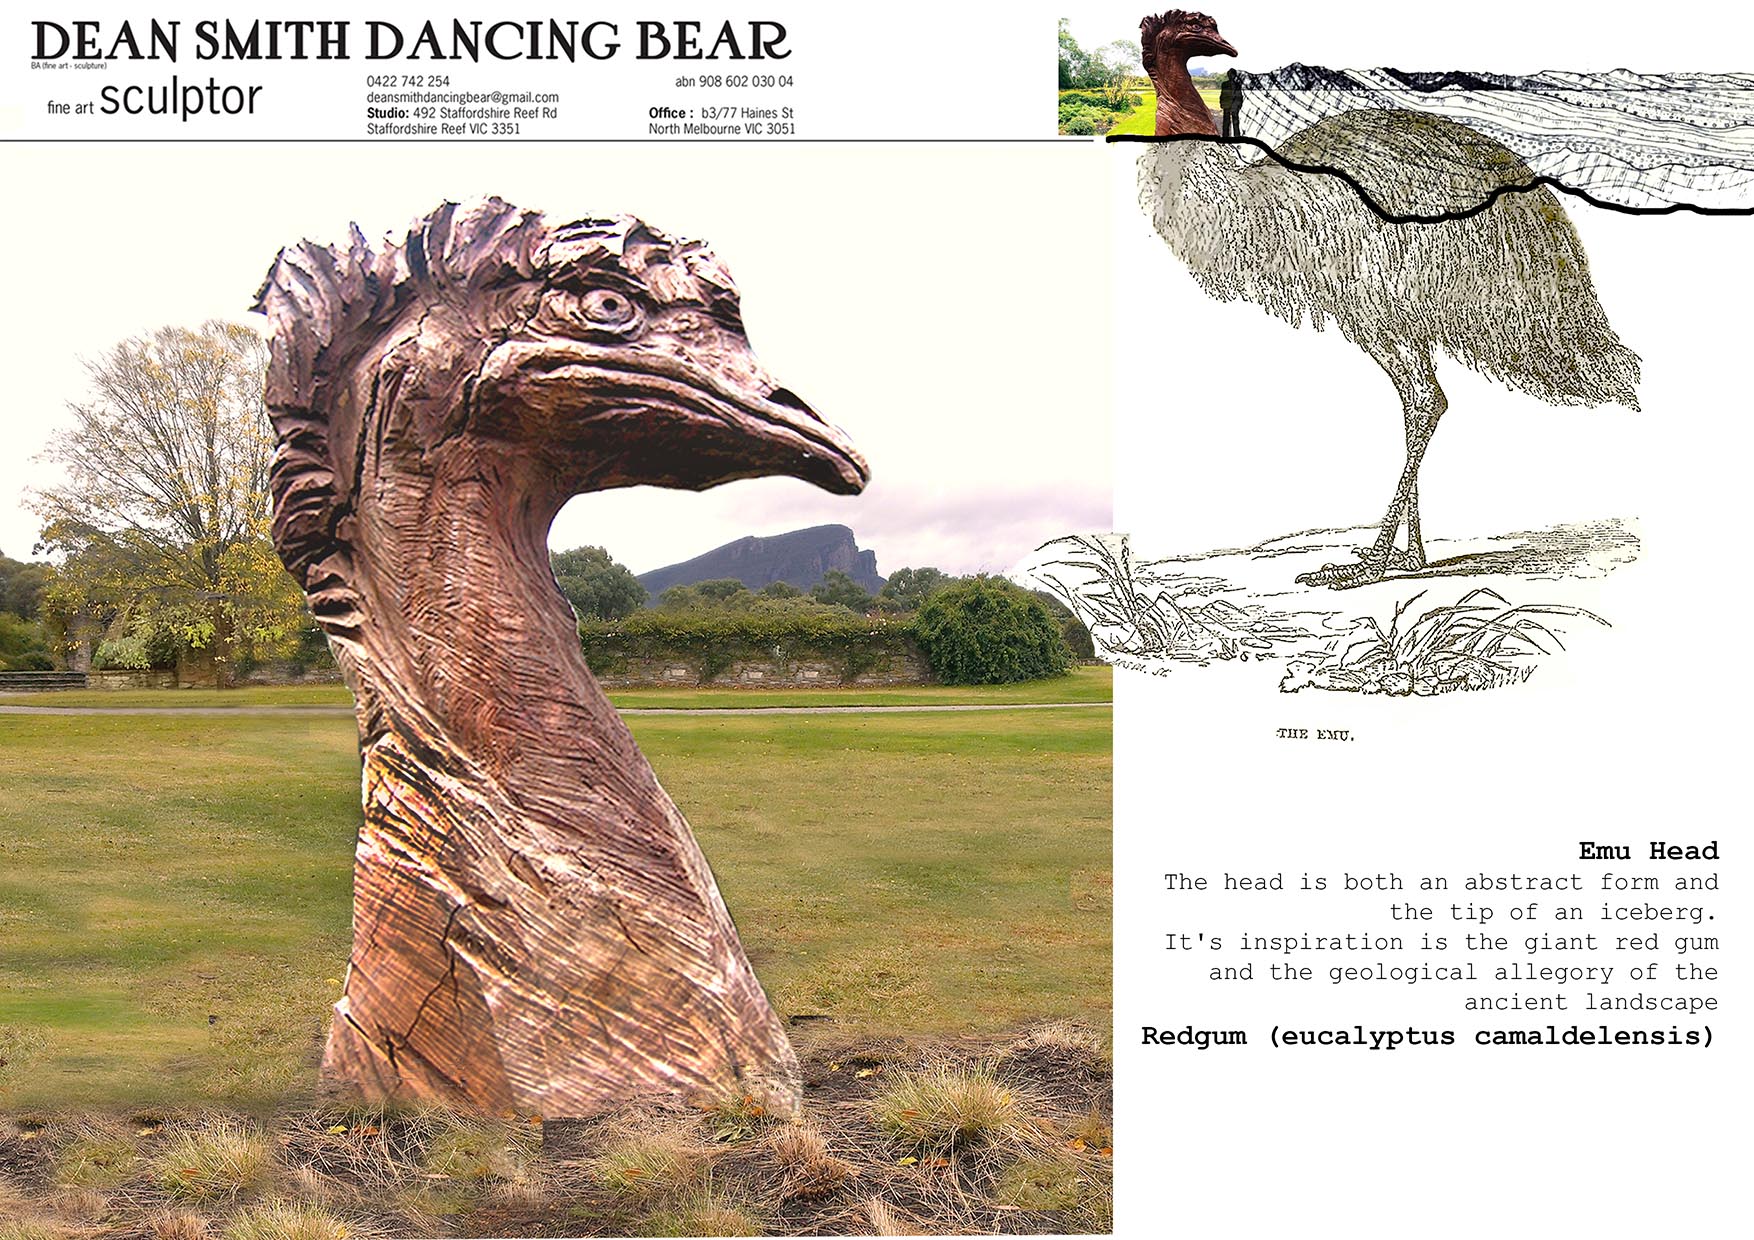 emu head sculpture_small